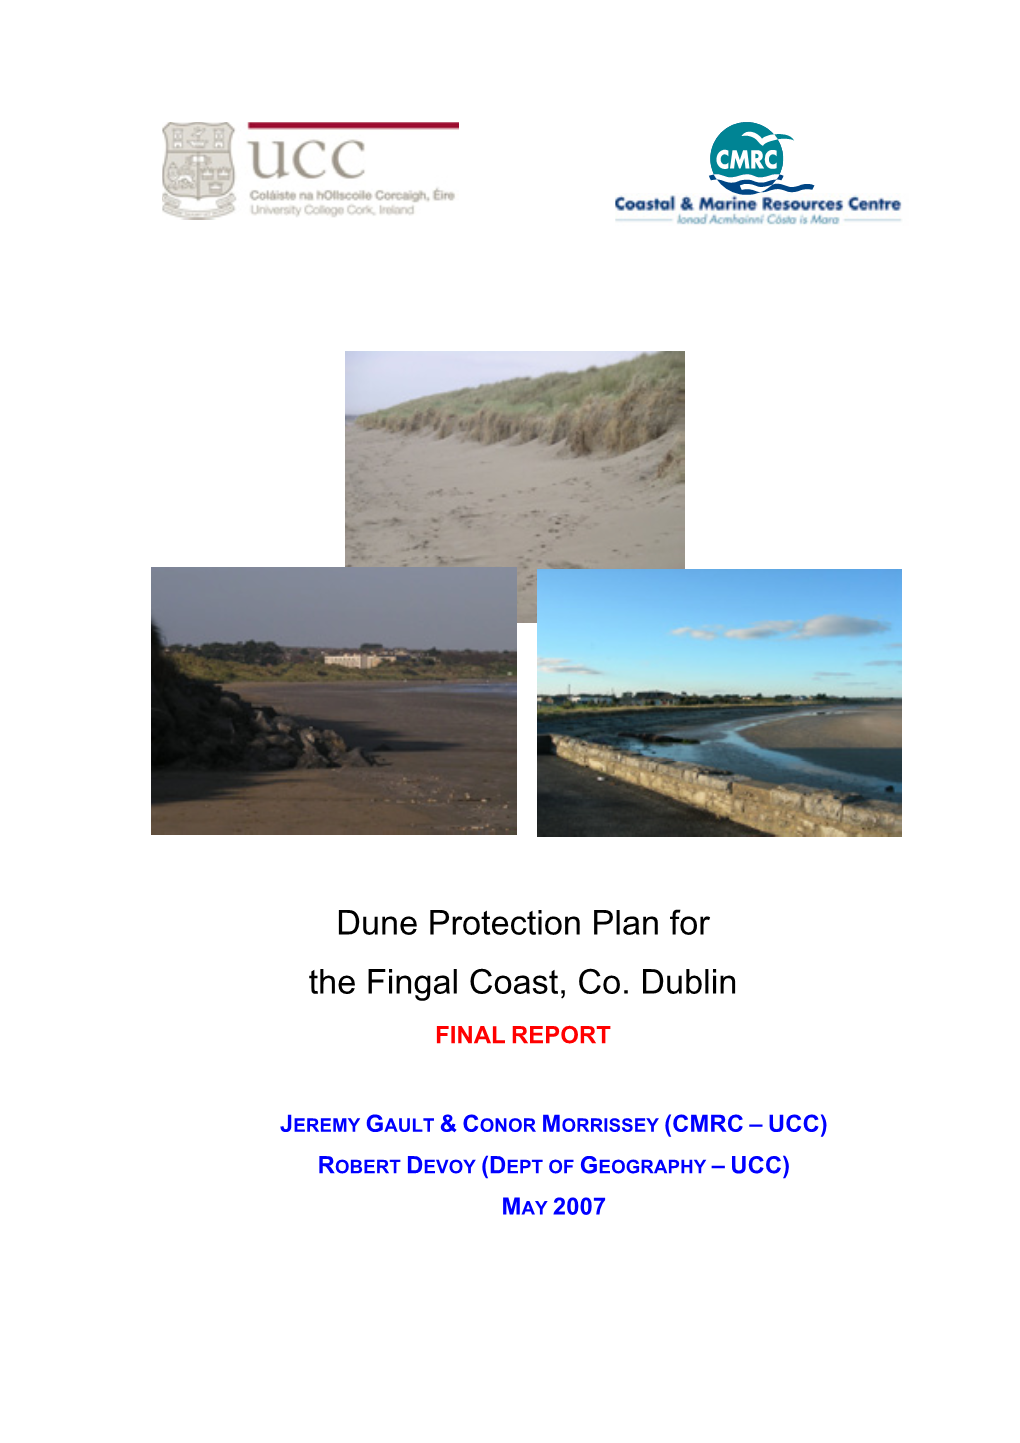 Dune Protection Plan for the Fingal Coast, Co. Dublin 2007